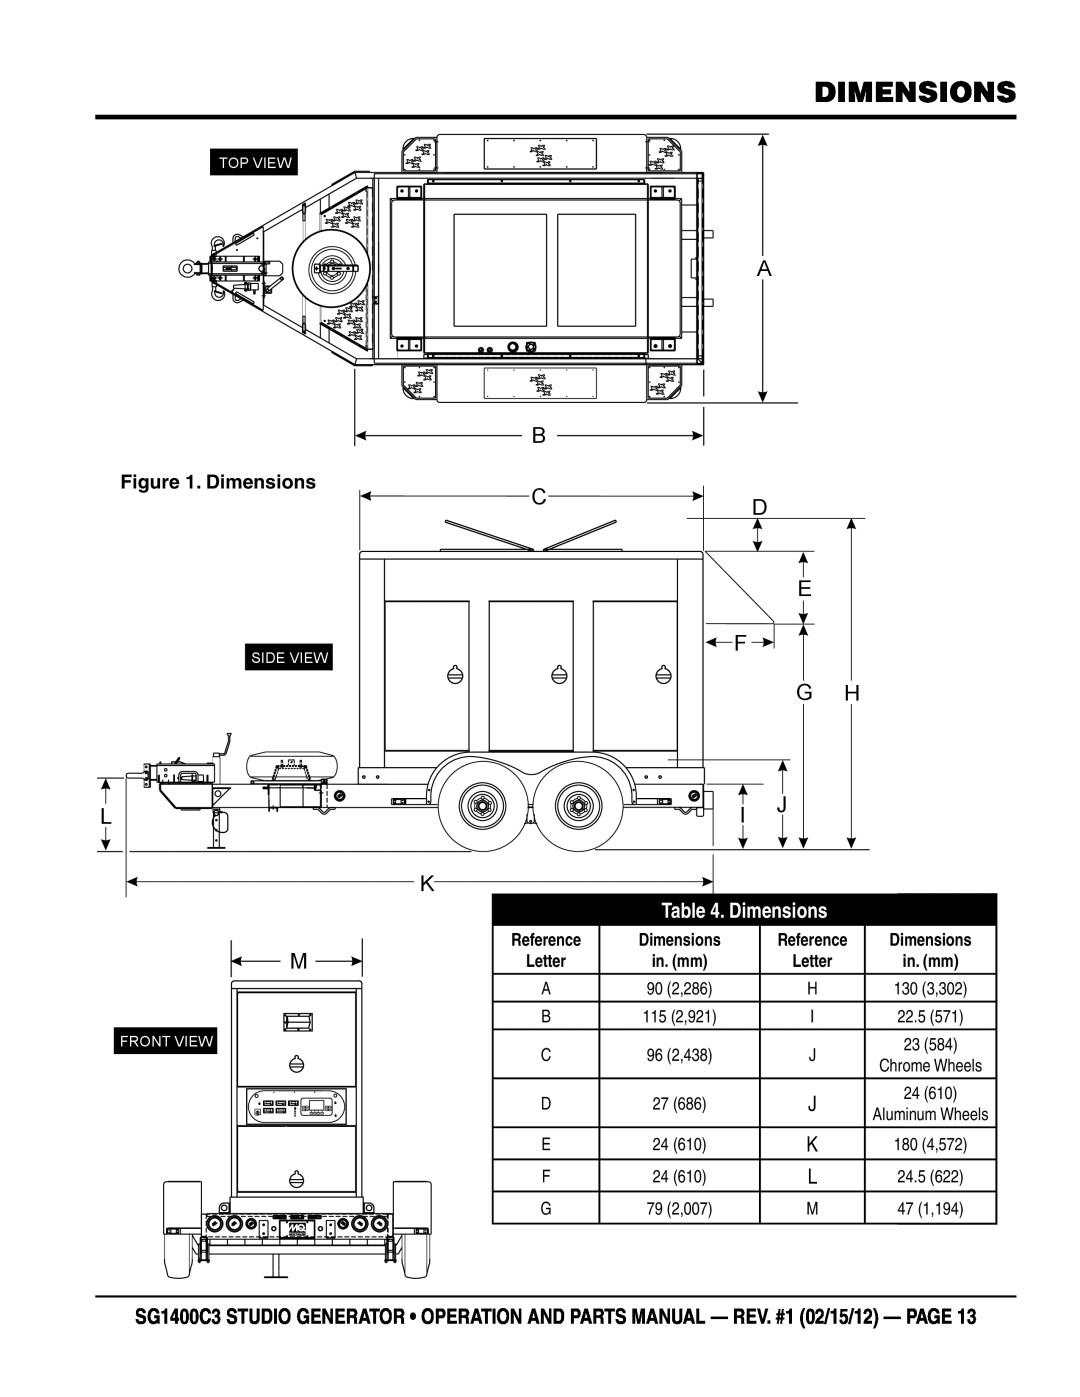 Multiquip SG1400C3-55748 manual dimensions, L K M, E F G H I J, Dimensions, Top View, Side View, Front View 